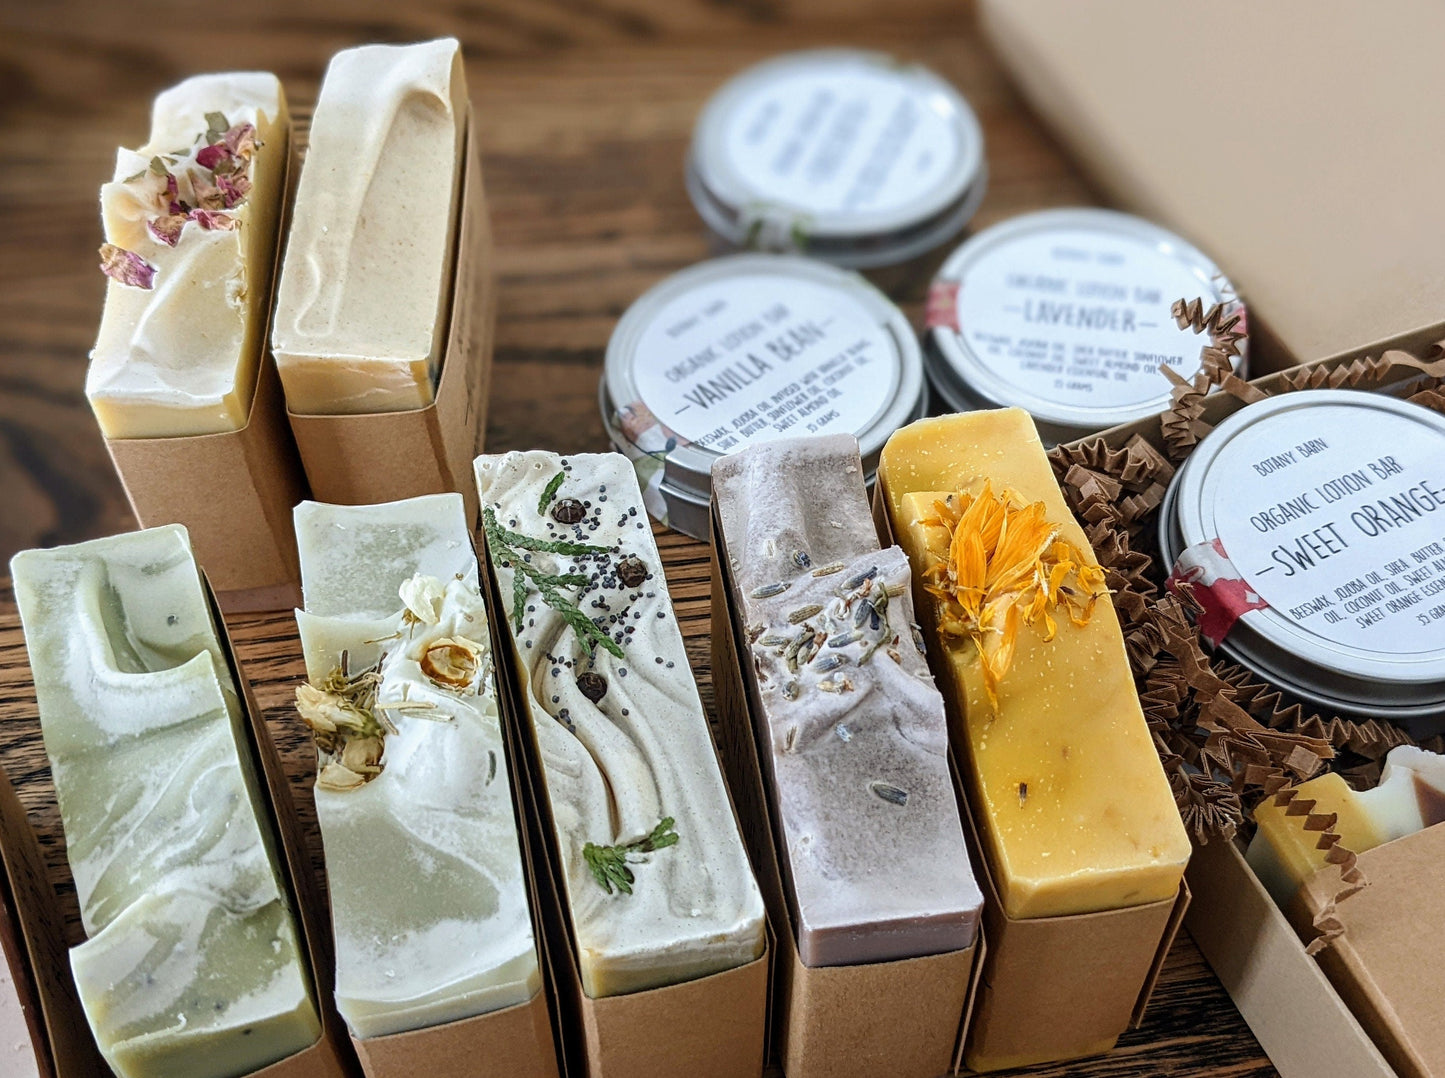 Eco-Friendly Gift Box with Handmade Organic Soap, Lip Balm & Blue Washcloth